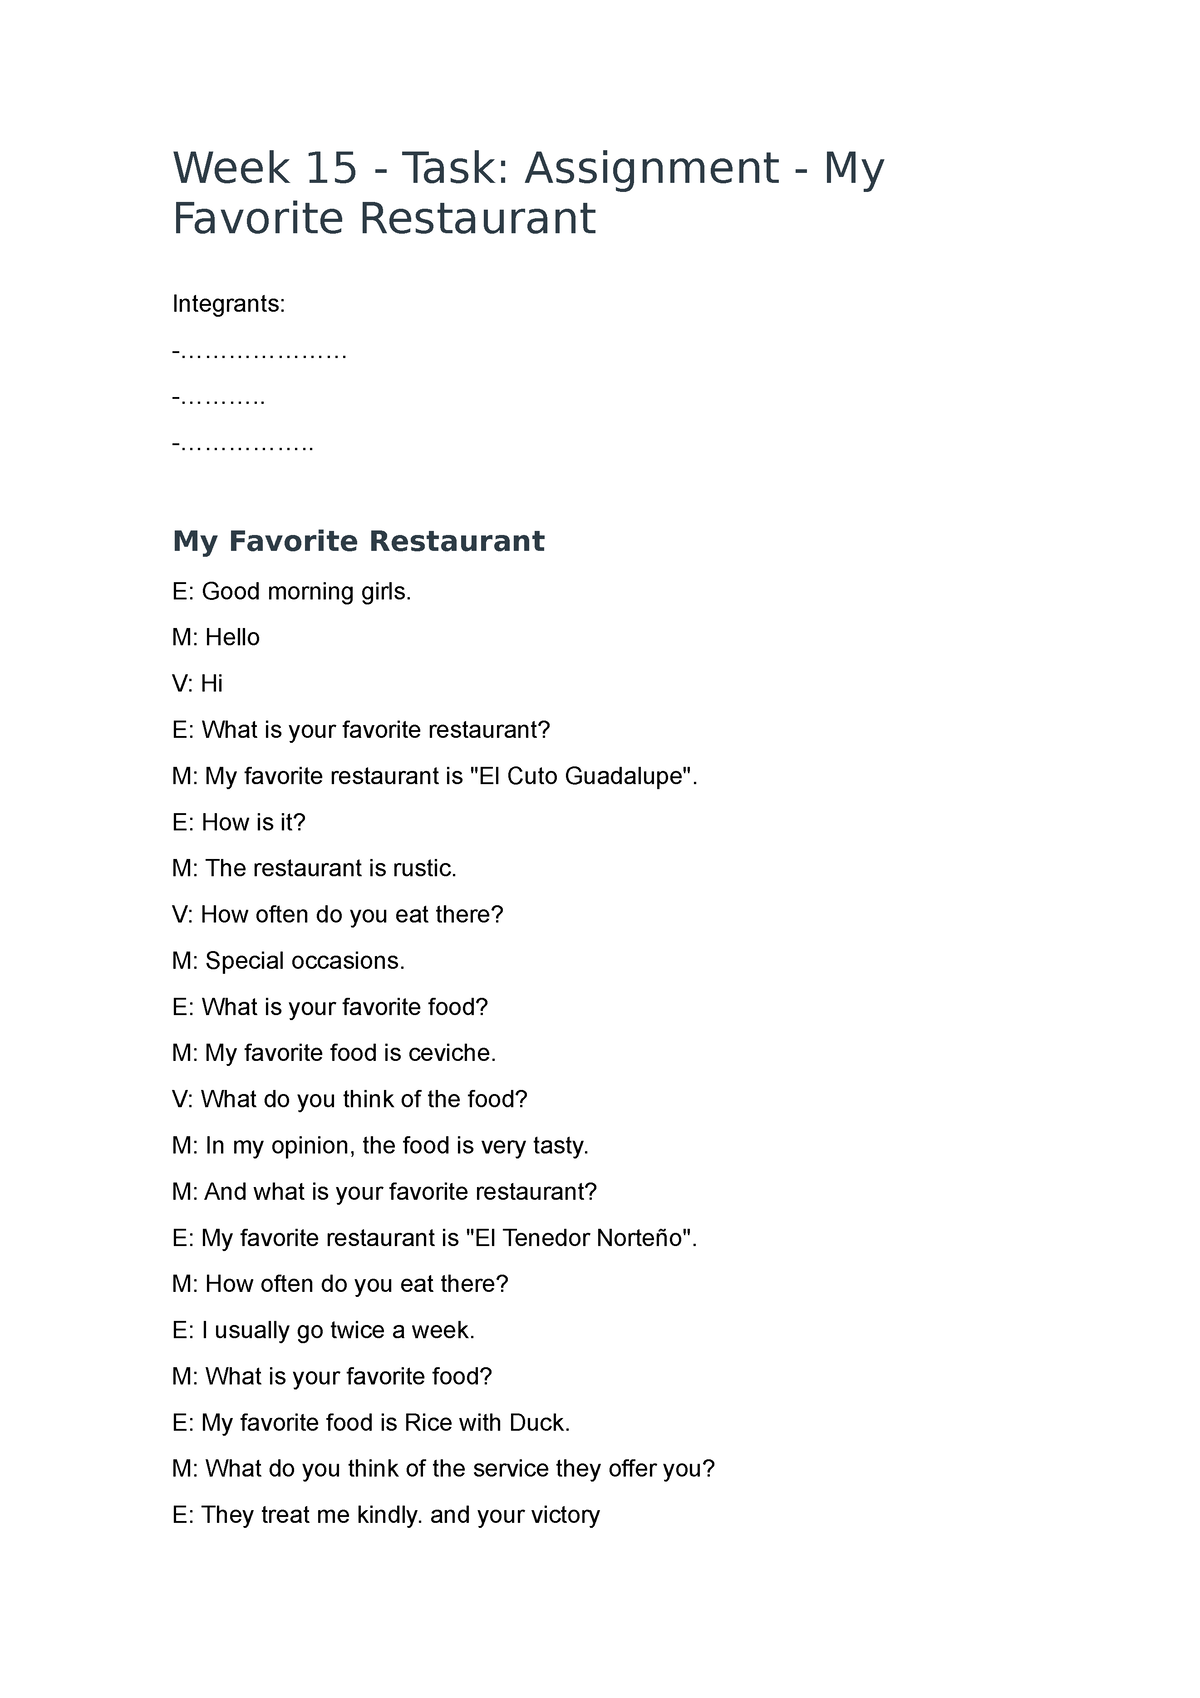 task assignment my favorite restaurant texto